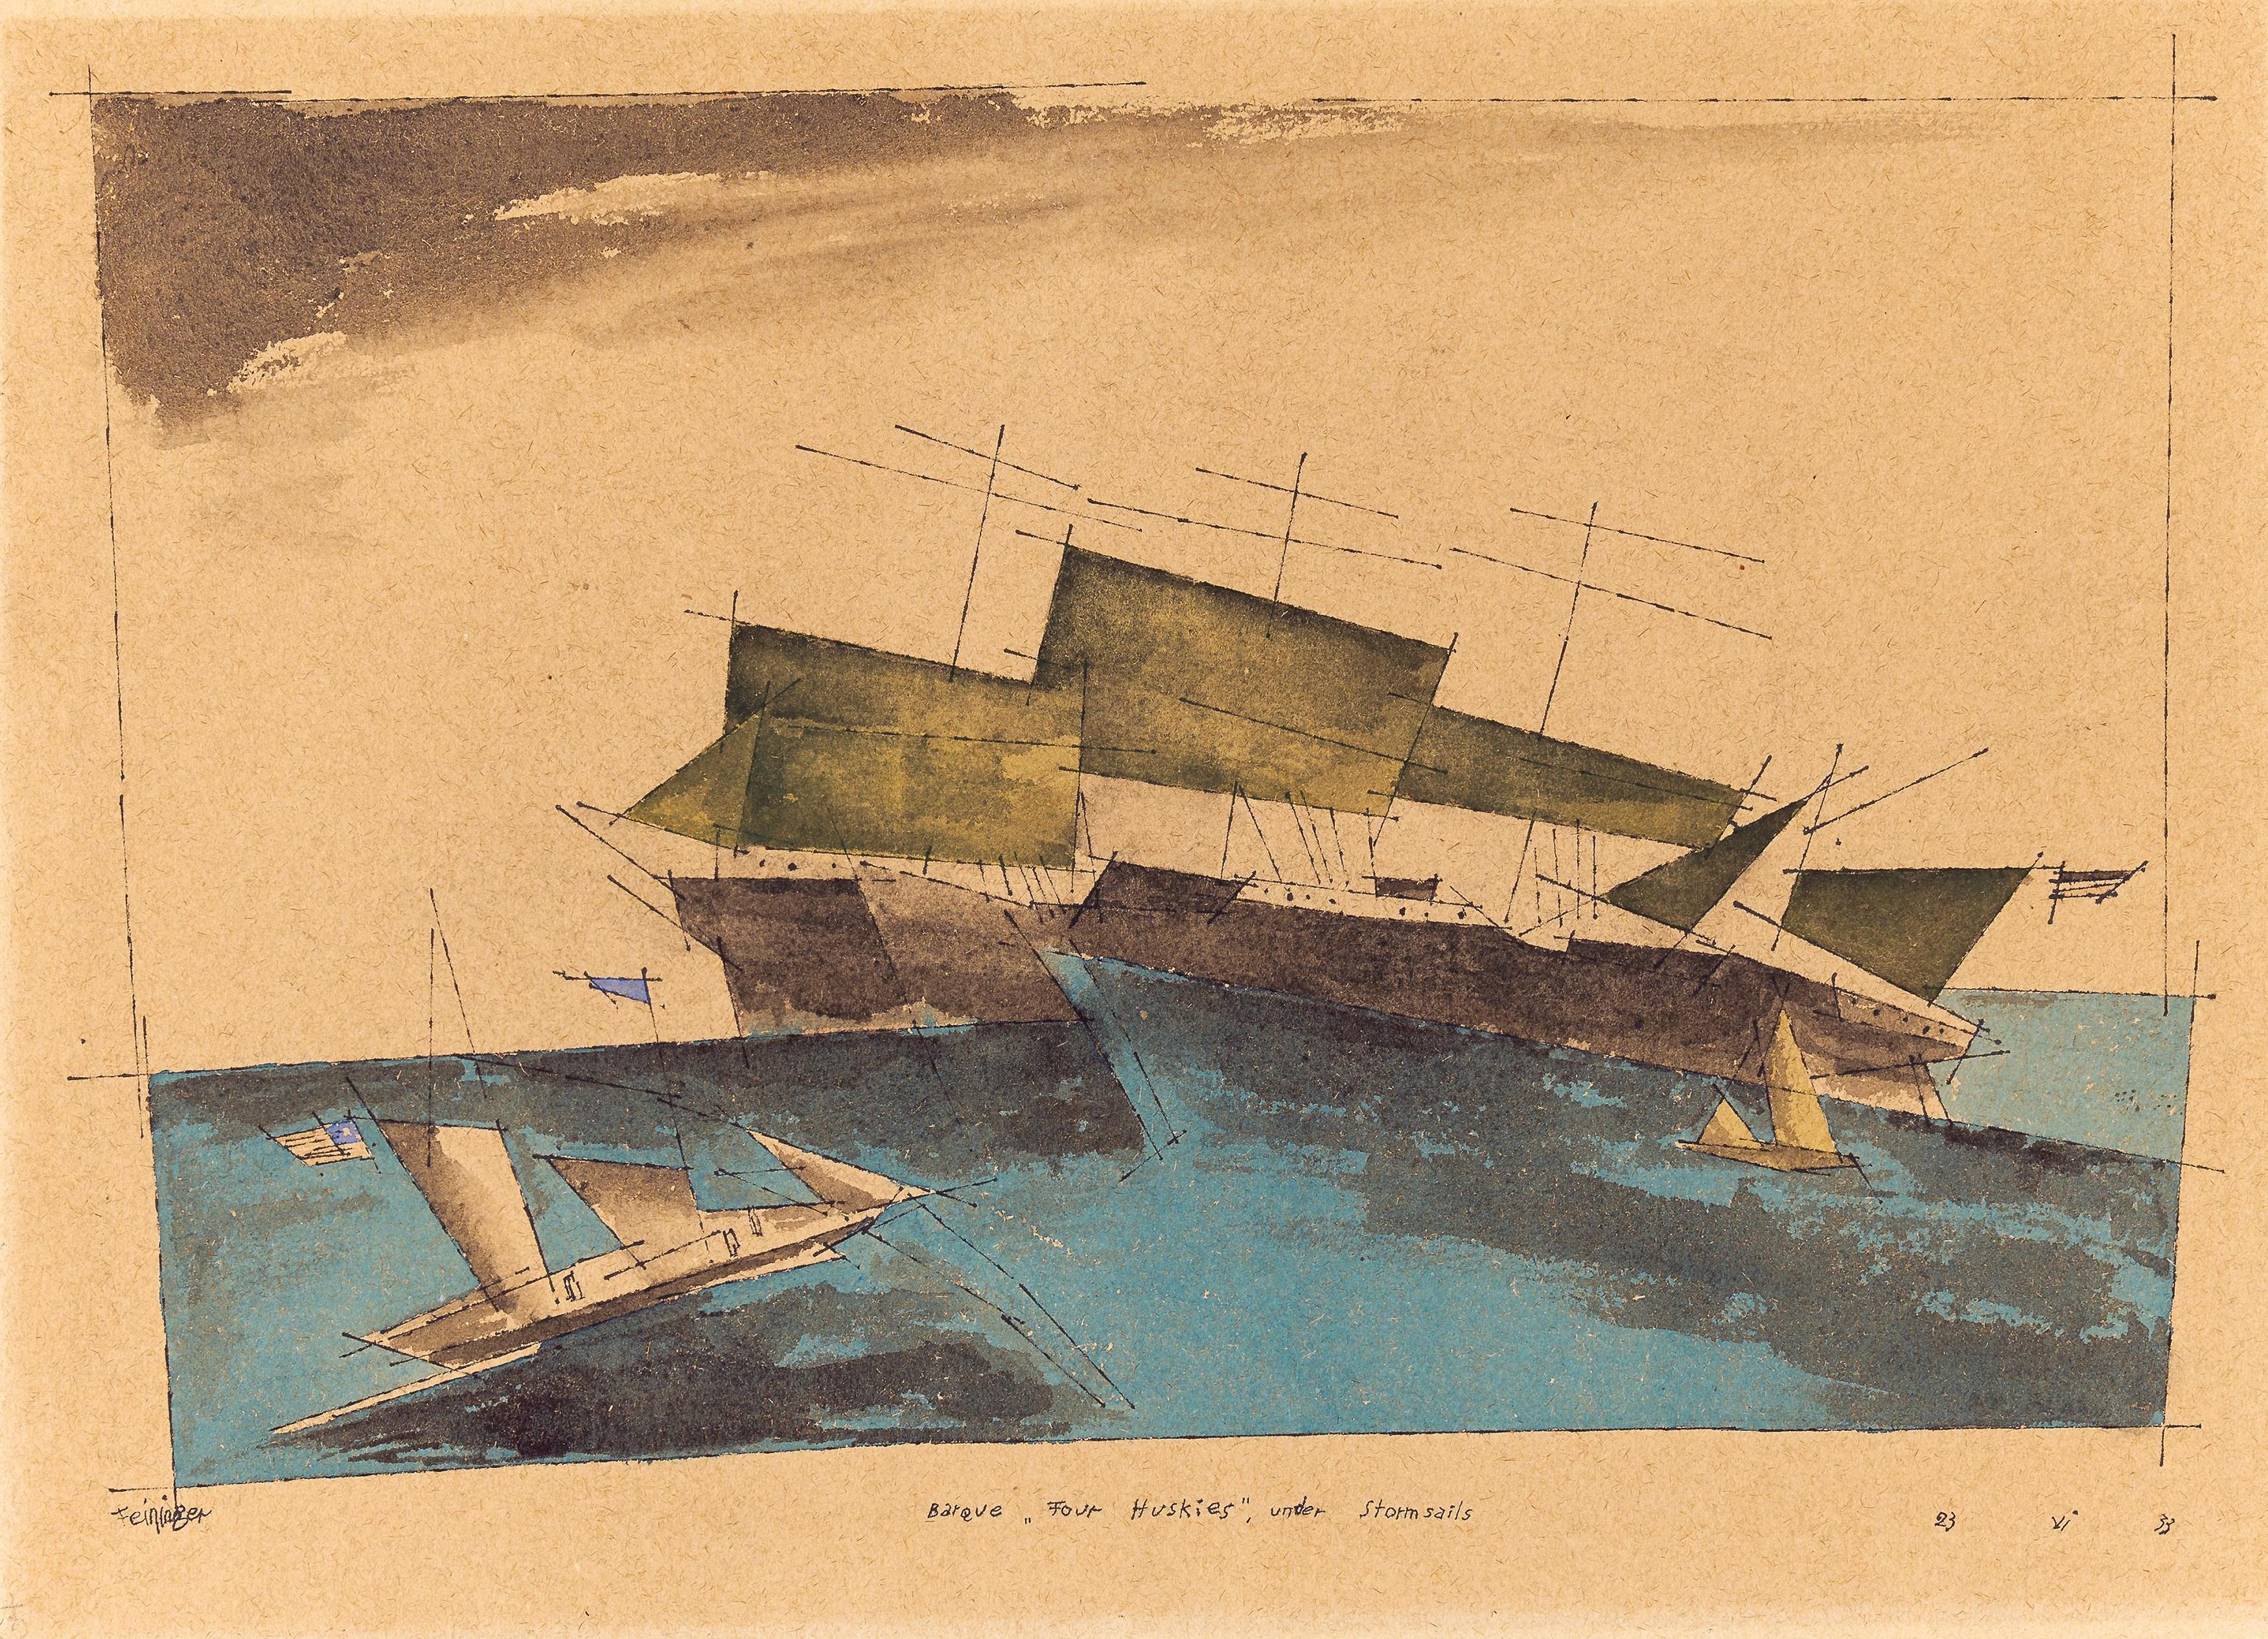 Feininger, LyonelNew York 1871 - 1956"Barque 'Four Huskies' under Stormsails". 1933. Aquarell auf